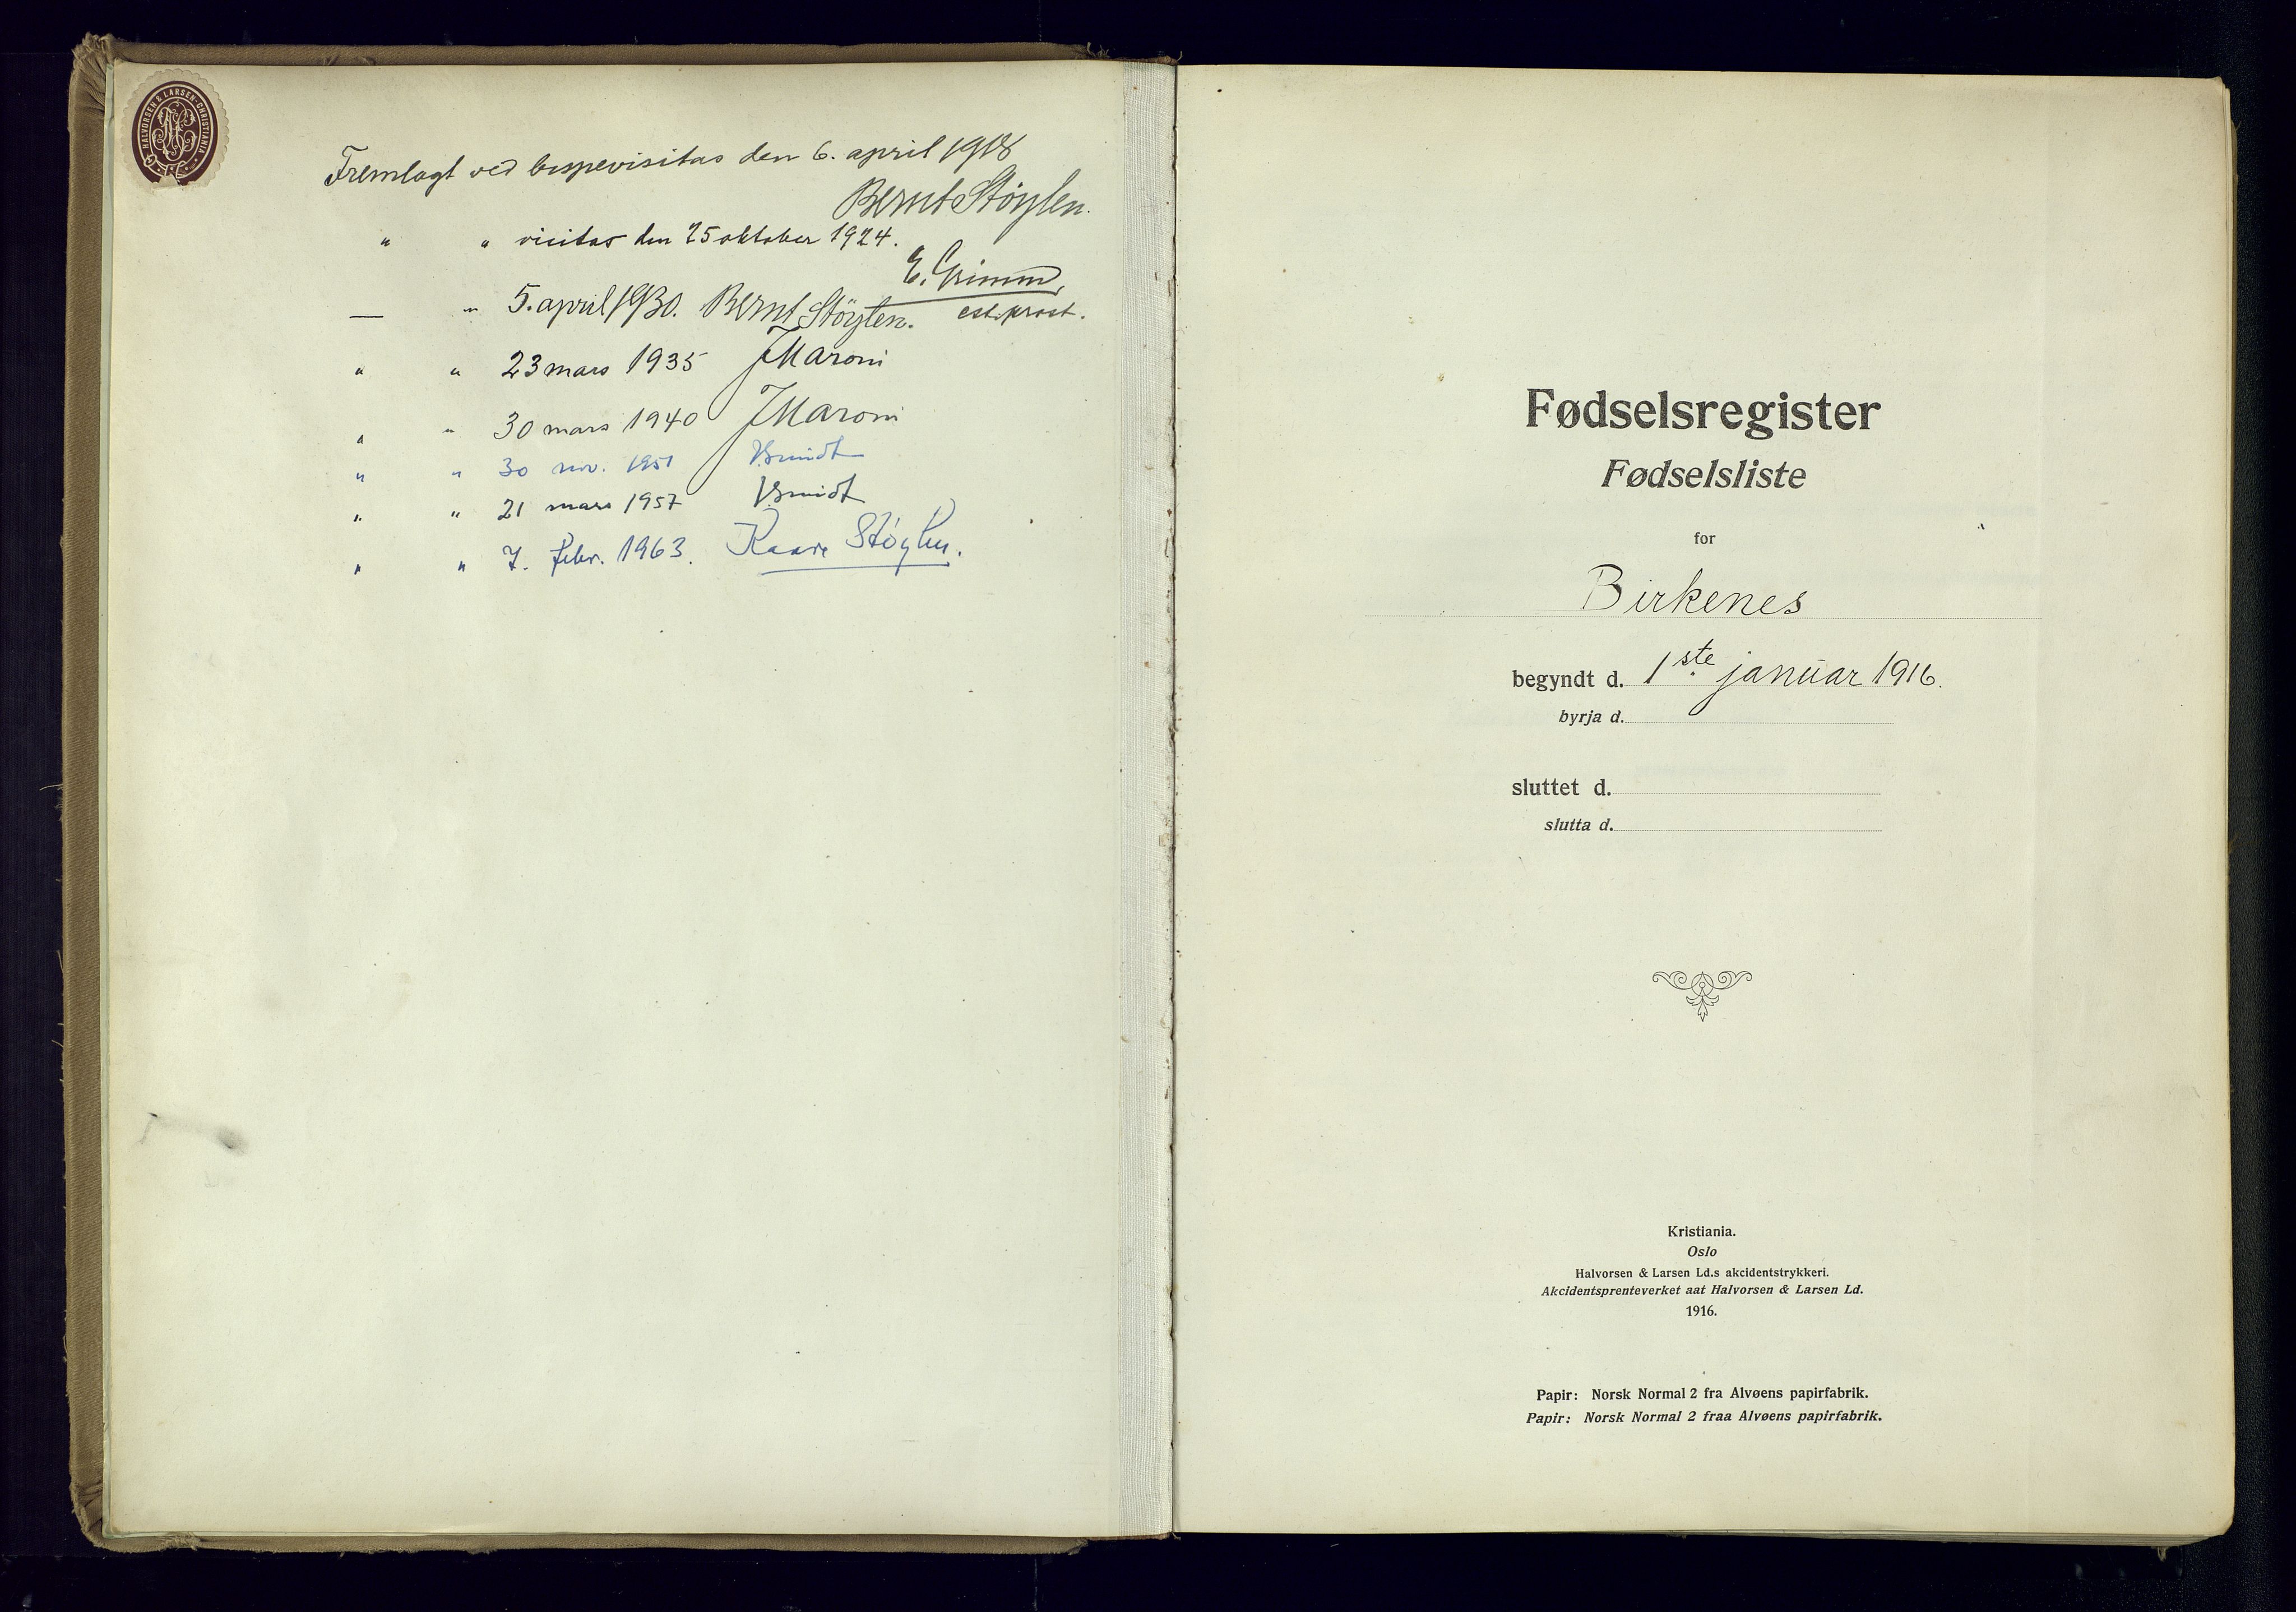 Birkenes sokneprestkontor, SAK/1111-0004/J/Ja/L0001: Birth register no. II.6.4, 1916-1962